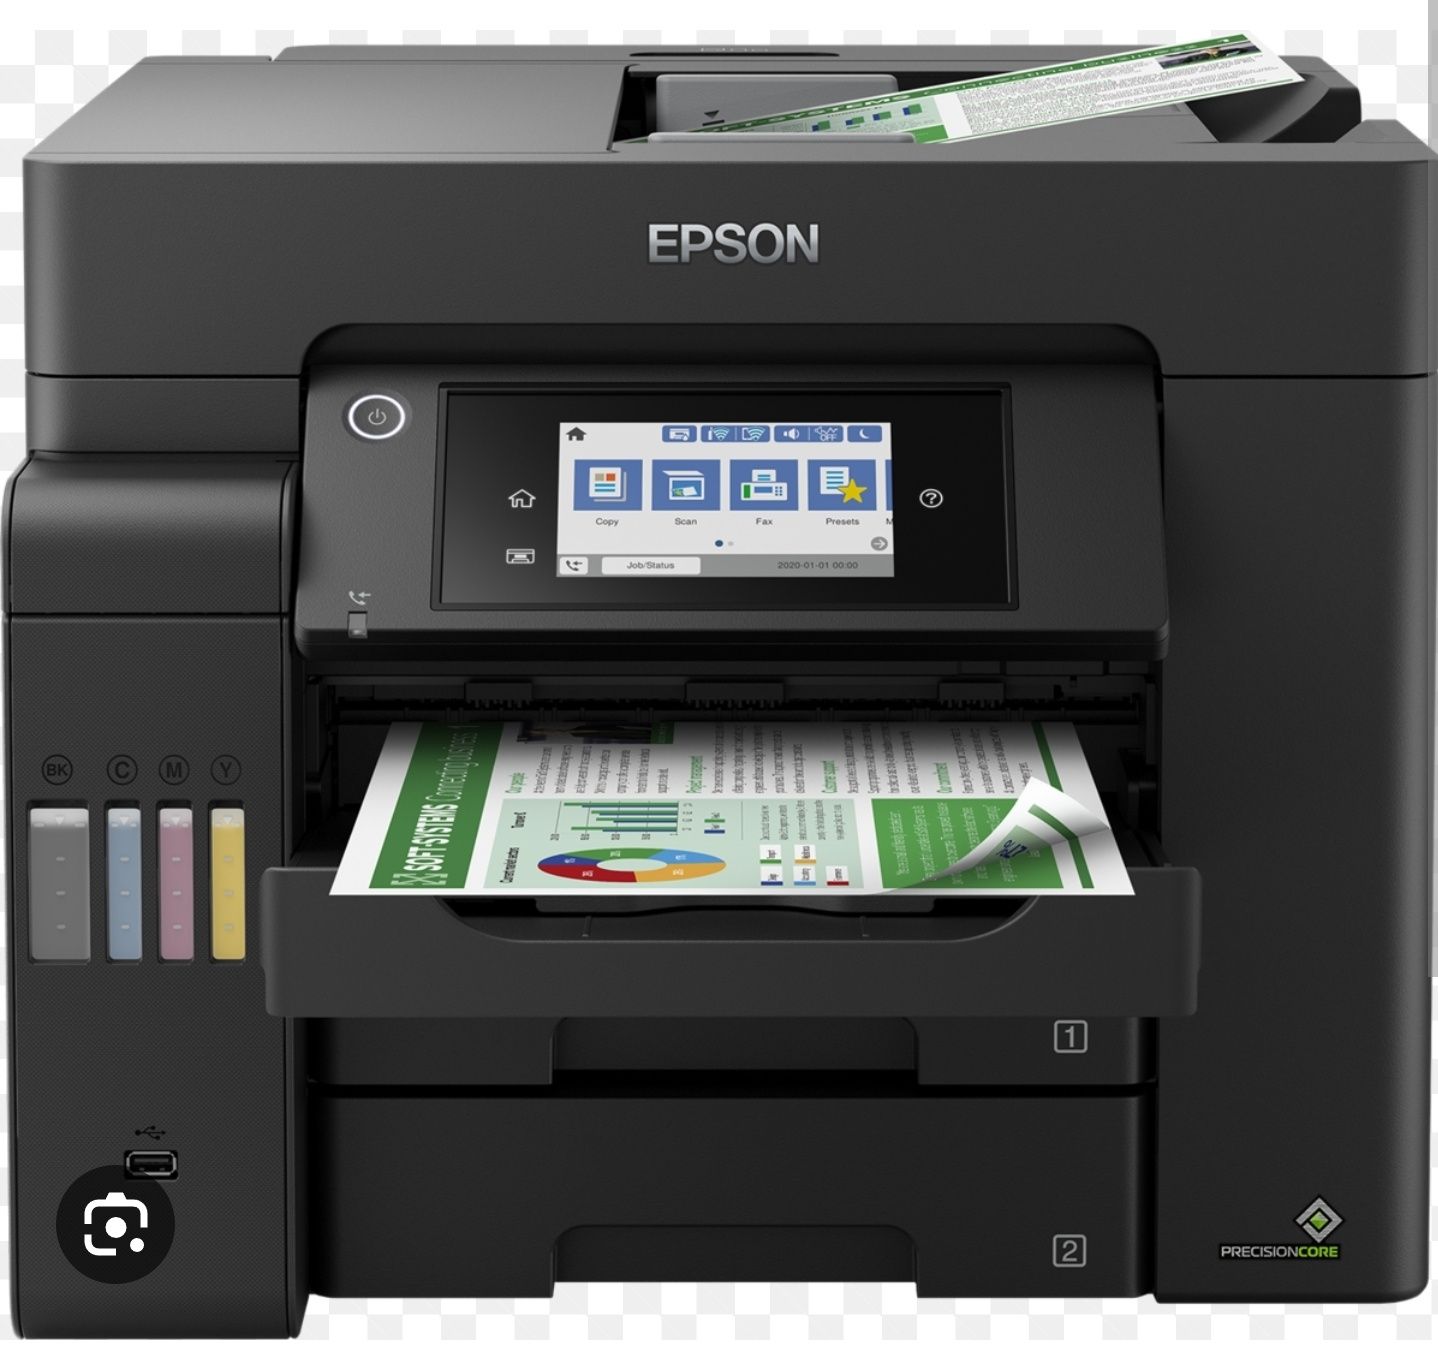 Epson printer ikki tomonlama